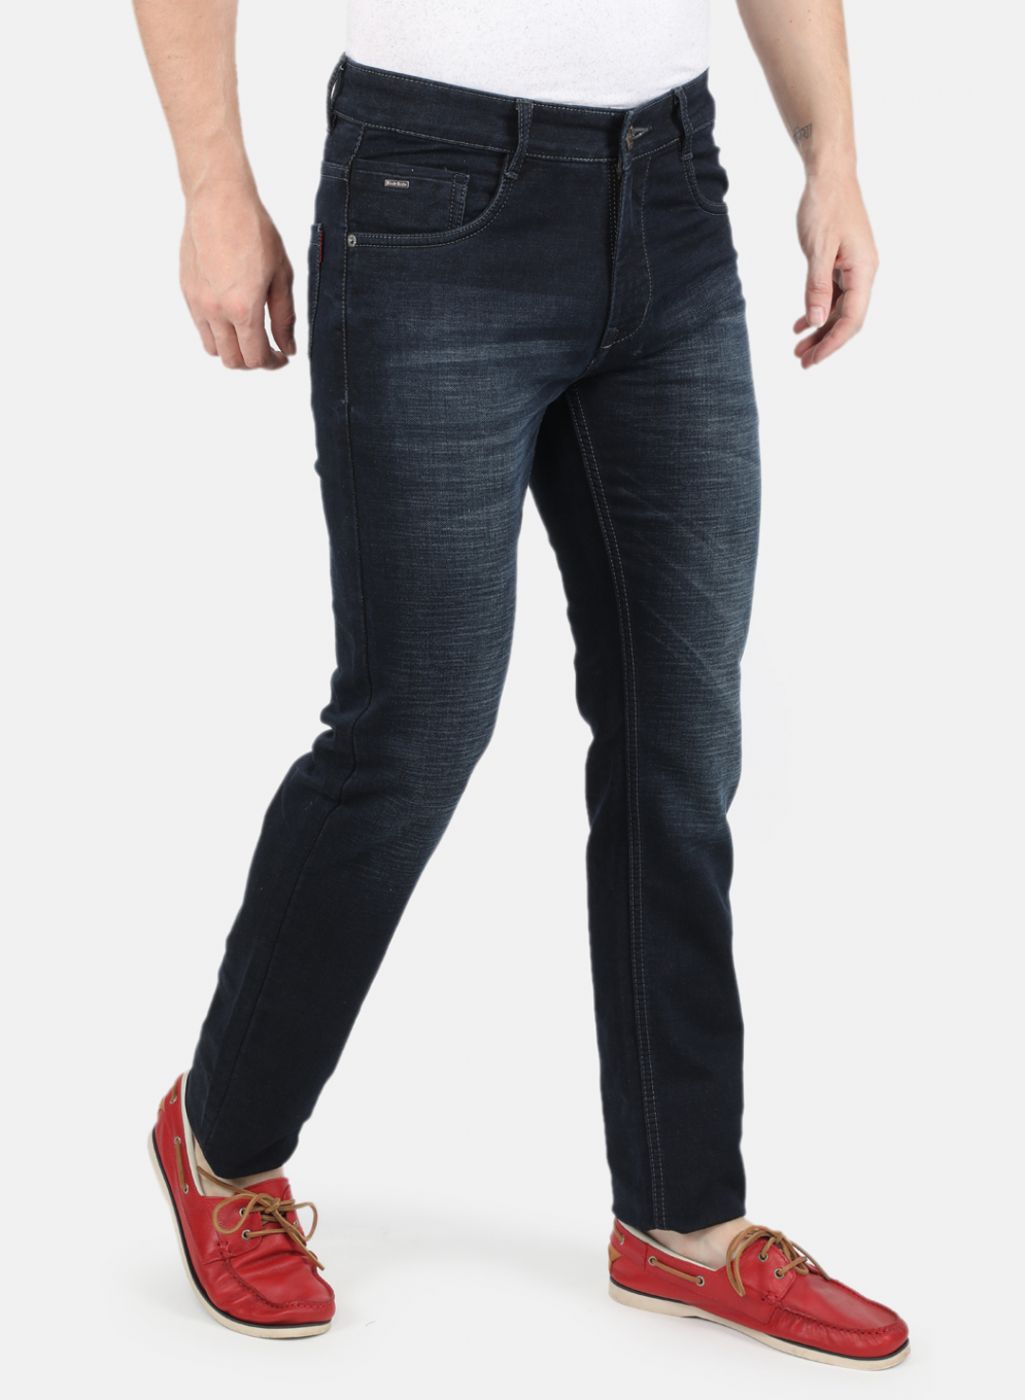 Vero Monte Carlo Jeans - Buy Vero Monte Carlo Jeans online in India